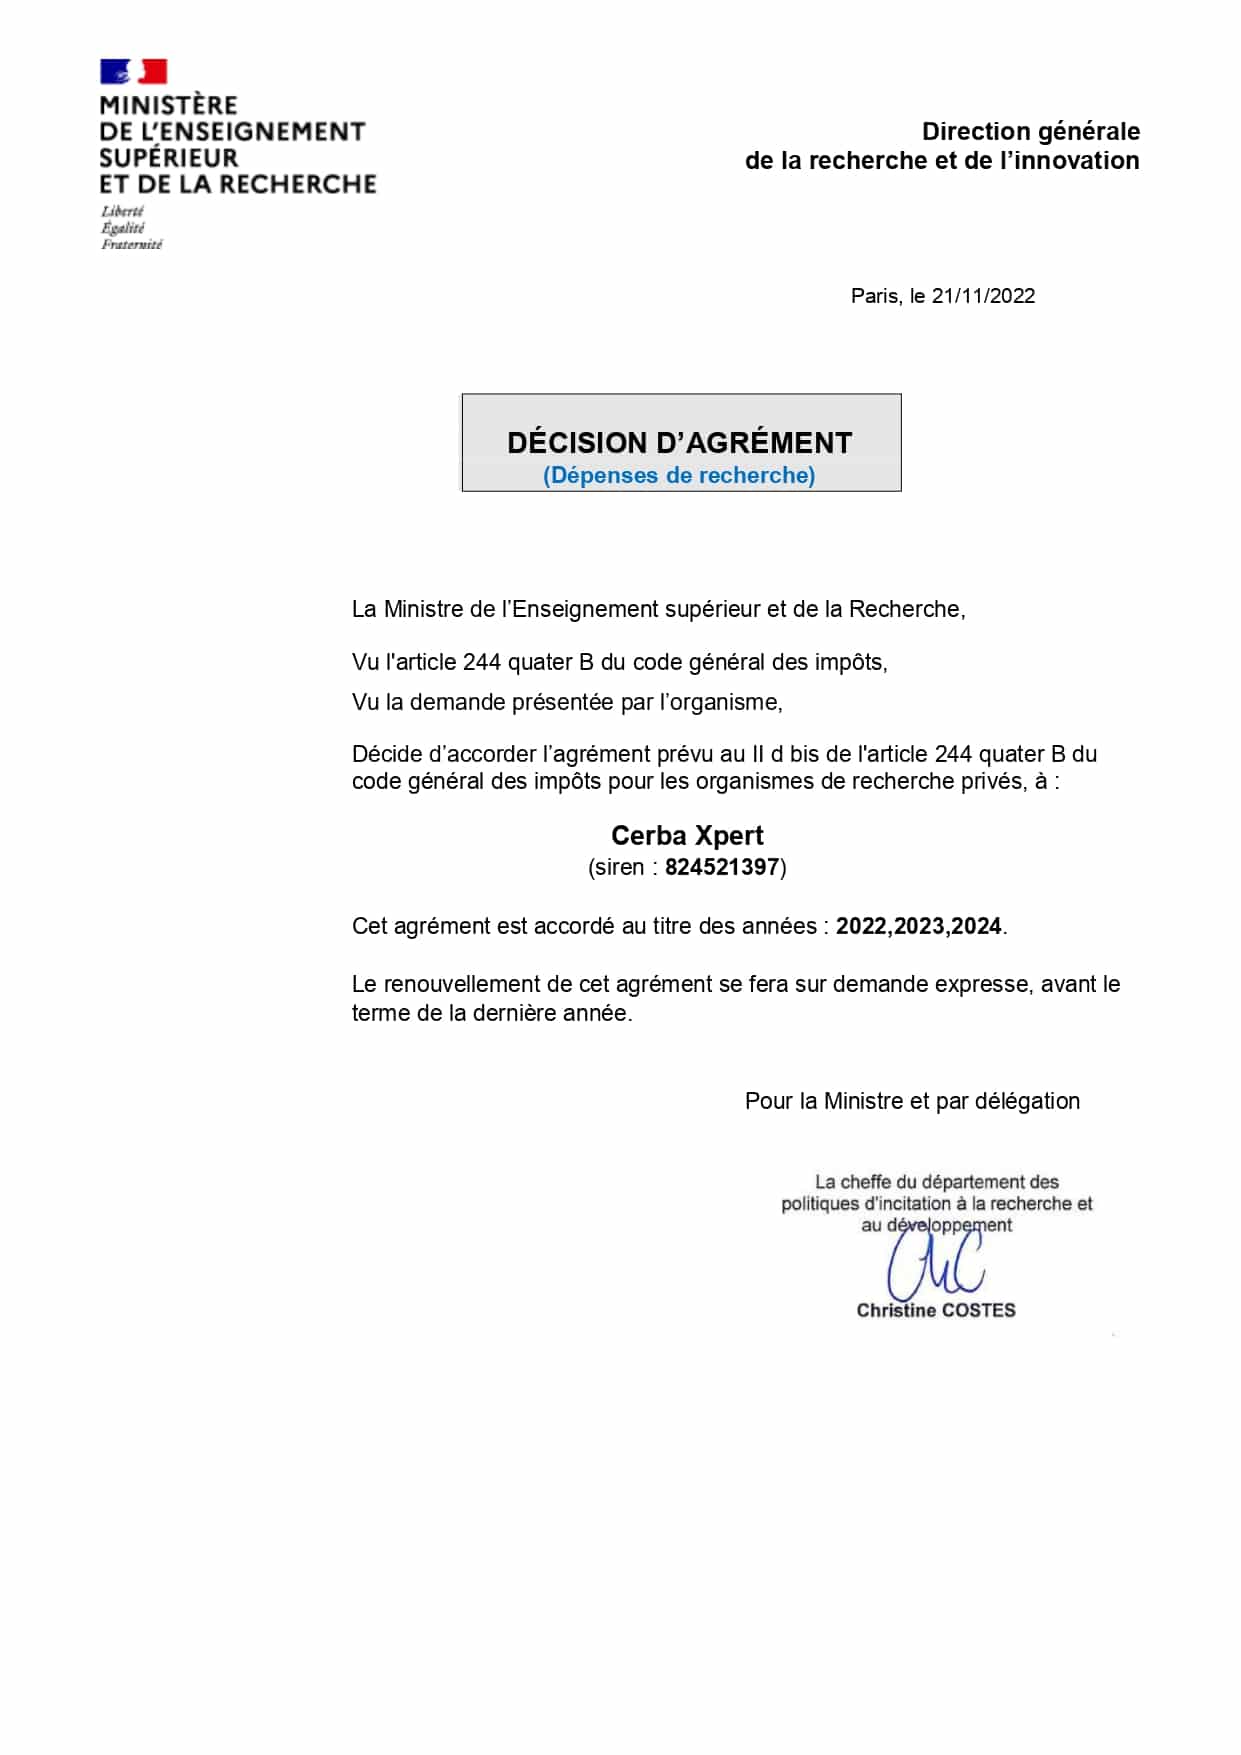 Cerba Research - Certificate - Decision CIR Cerba Xpert_